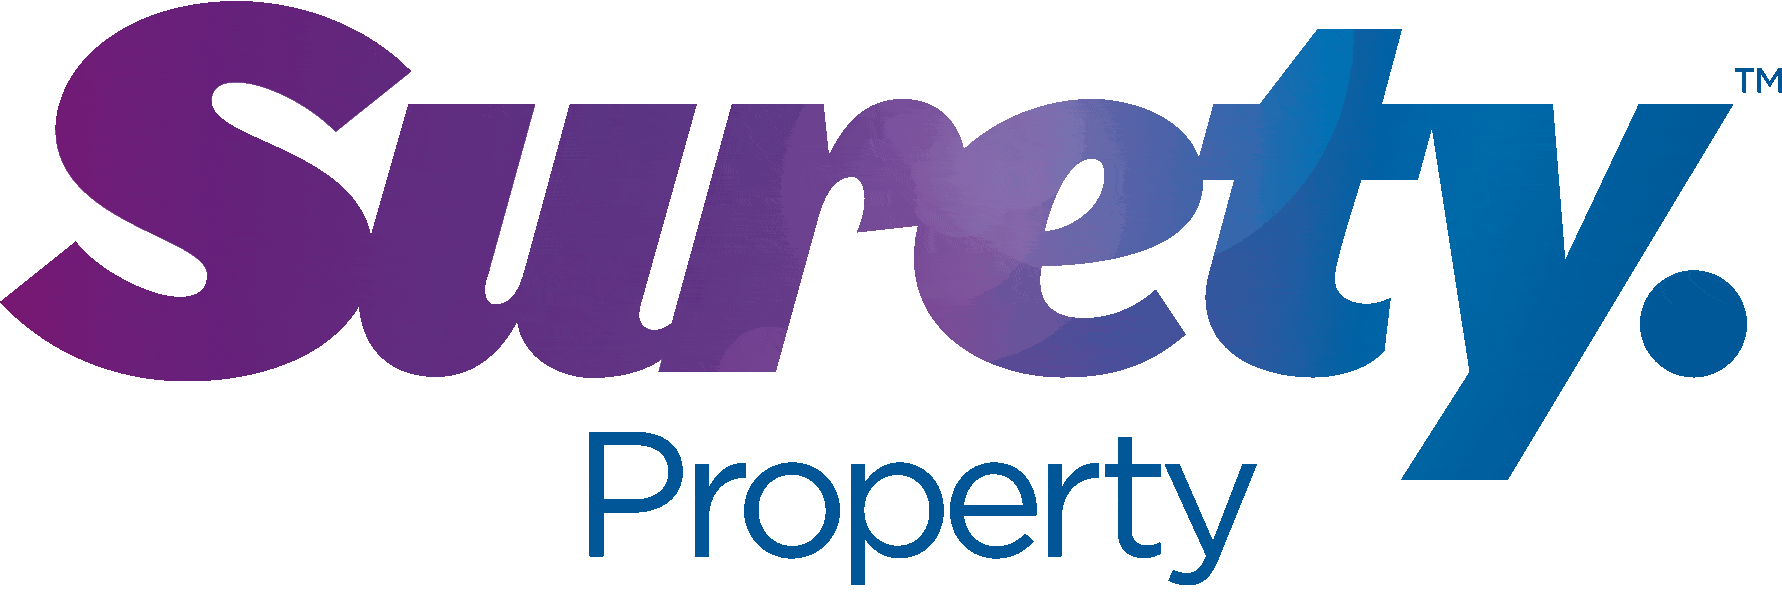 Surety-property-group